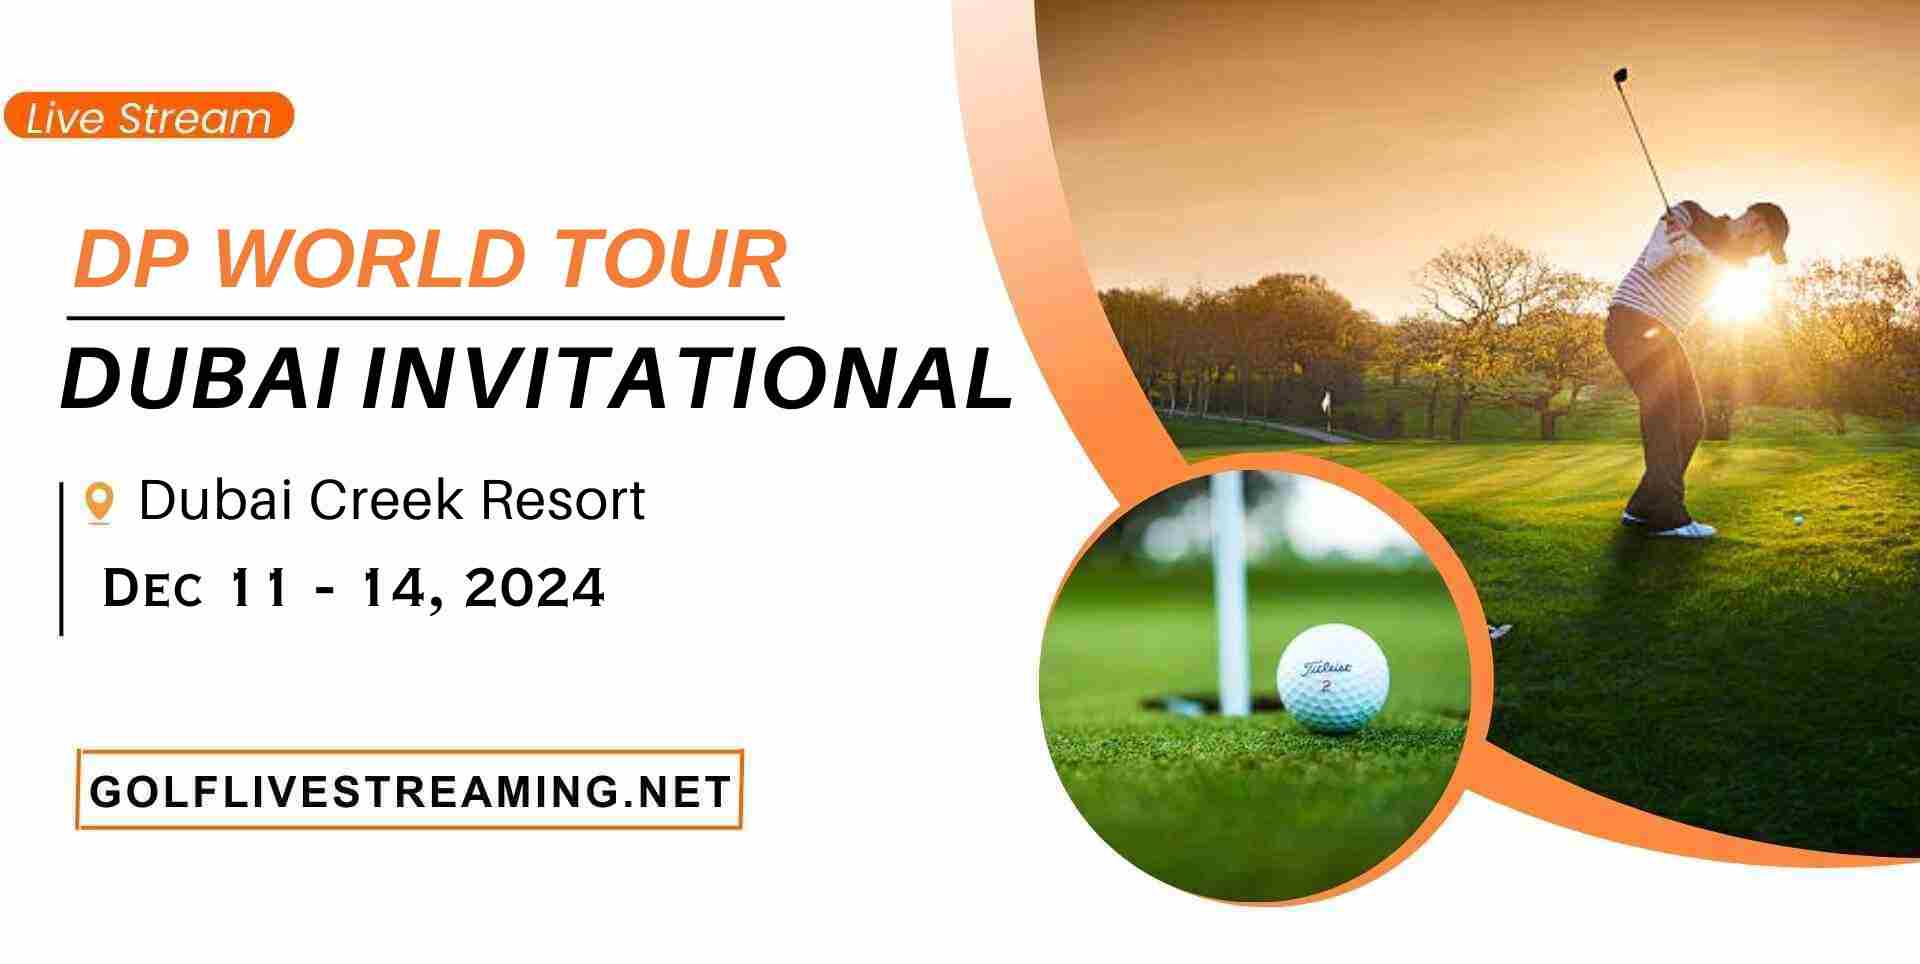 Dubai Invitational Golf DP World Tour Live